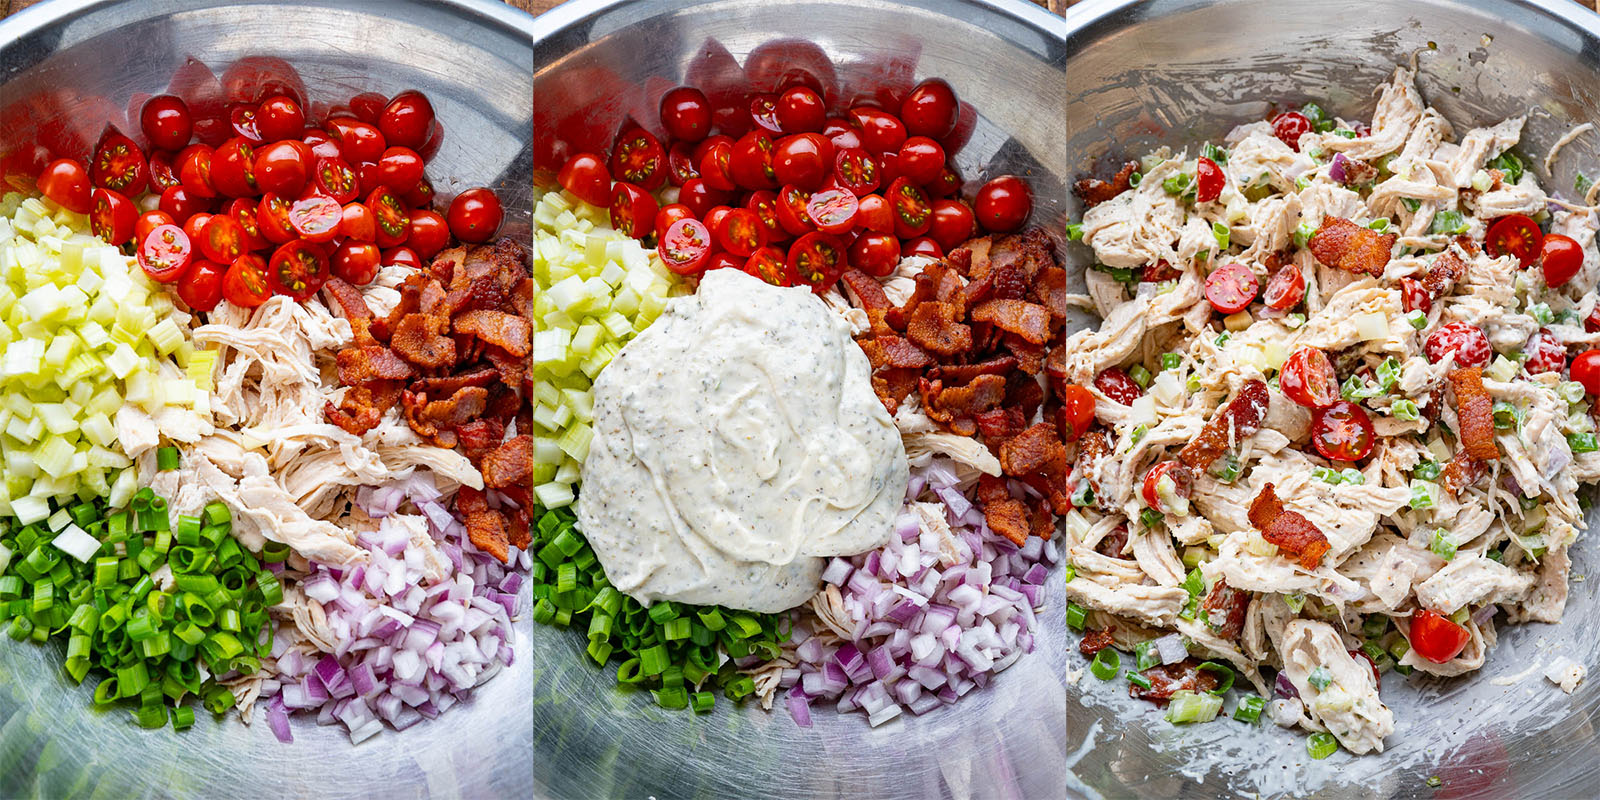 BLT Salad Lunchbox